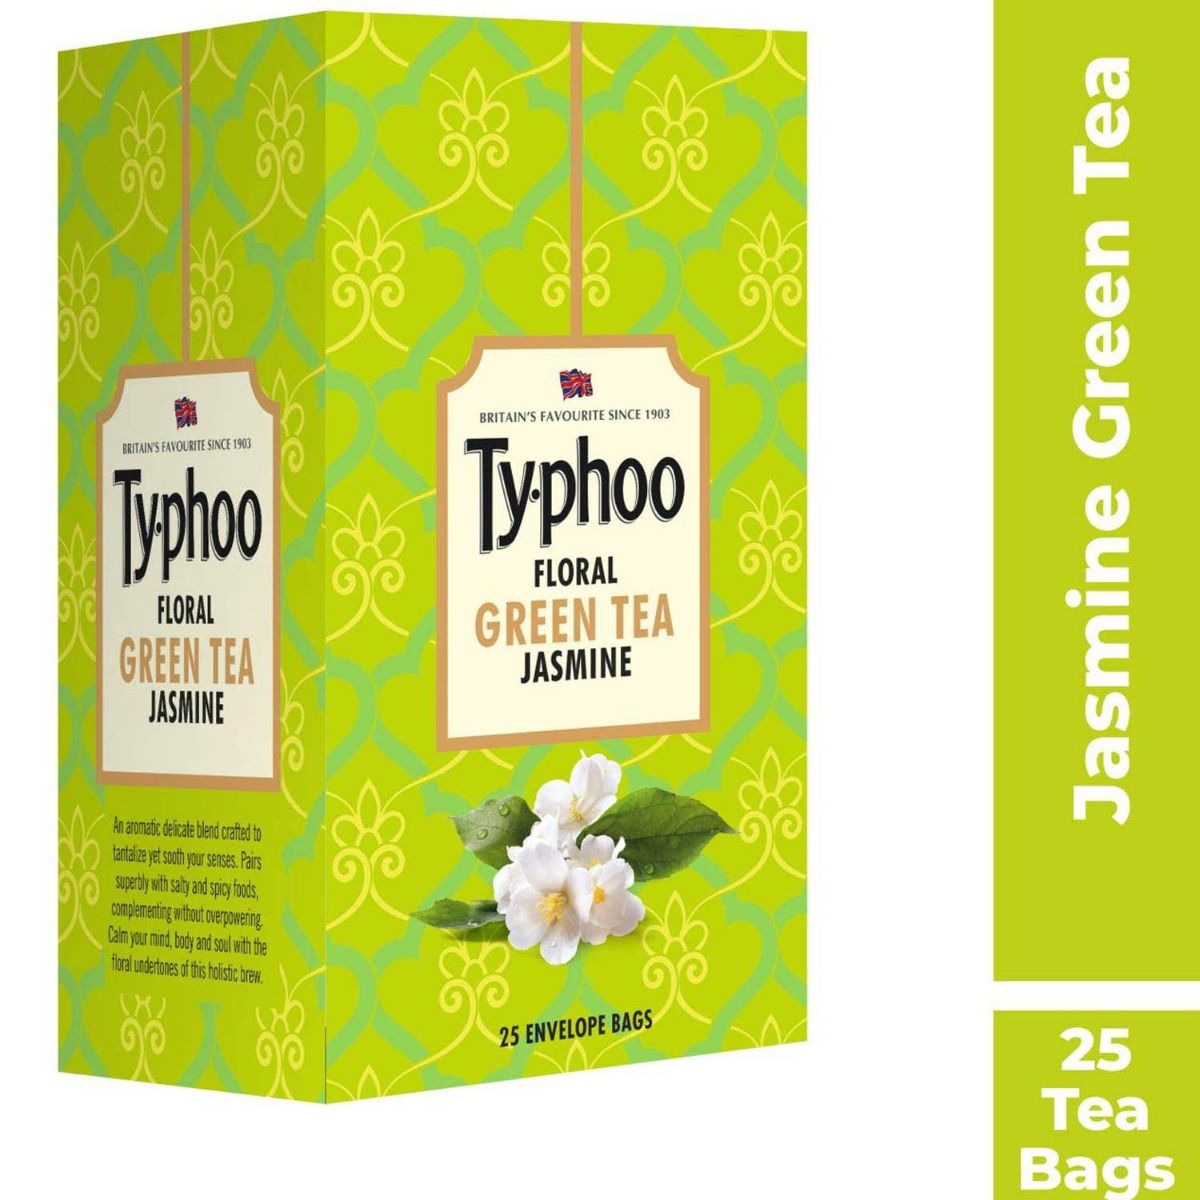 Ty.Phoo Floral Jasmine Green Tea Bags, 25 Count, Pack of 1 